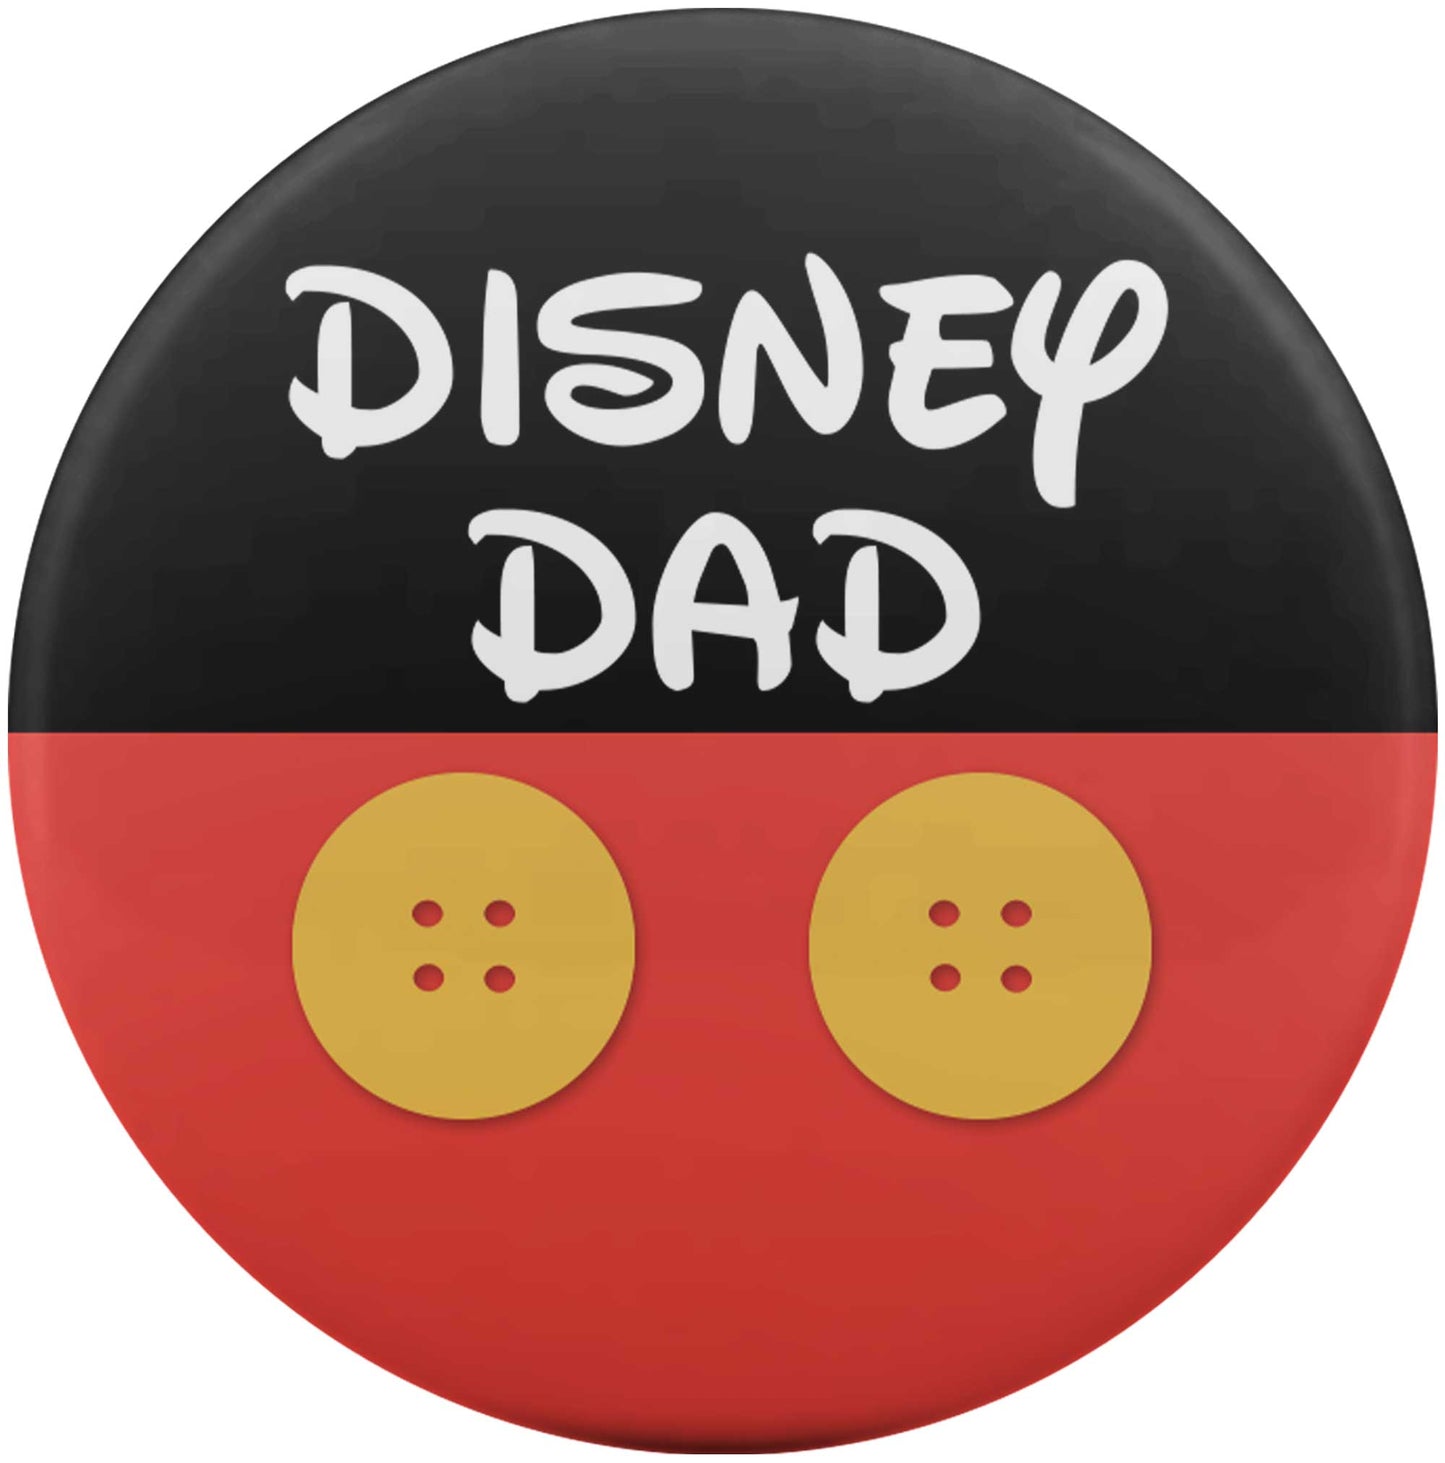 Disney Dad